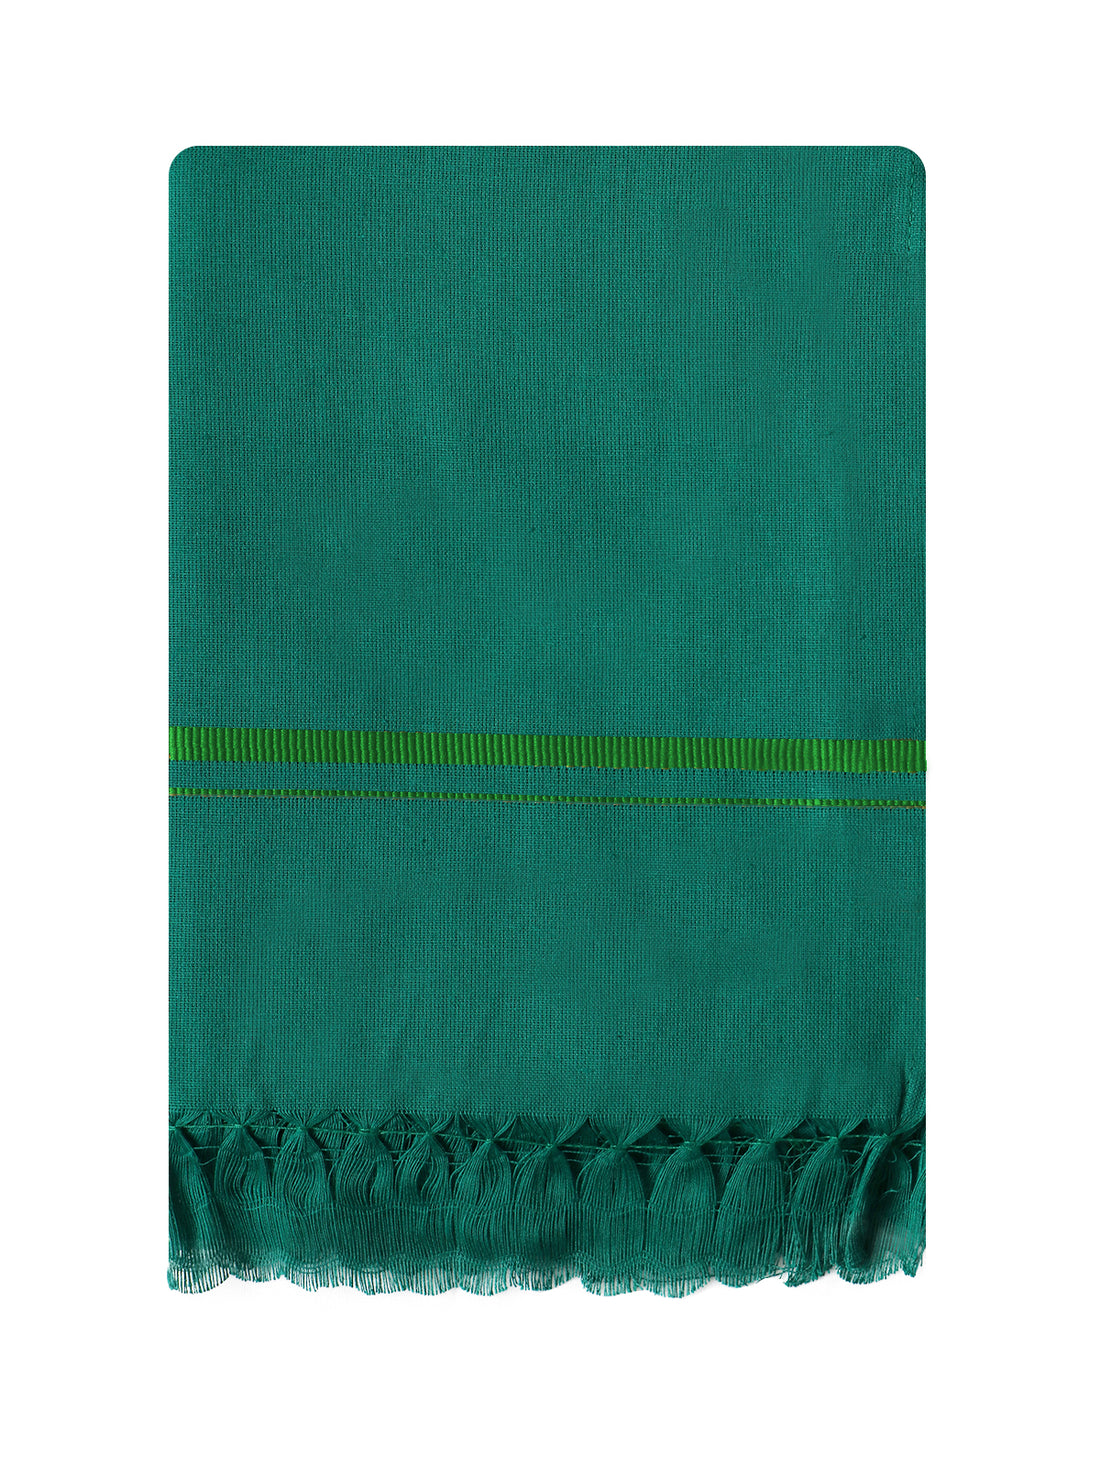 Om Muruga Temple Green Towel (85 x 150 cm) - Alaya Cotton